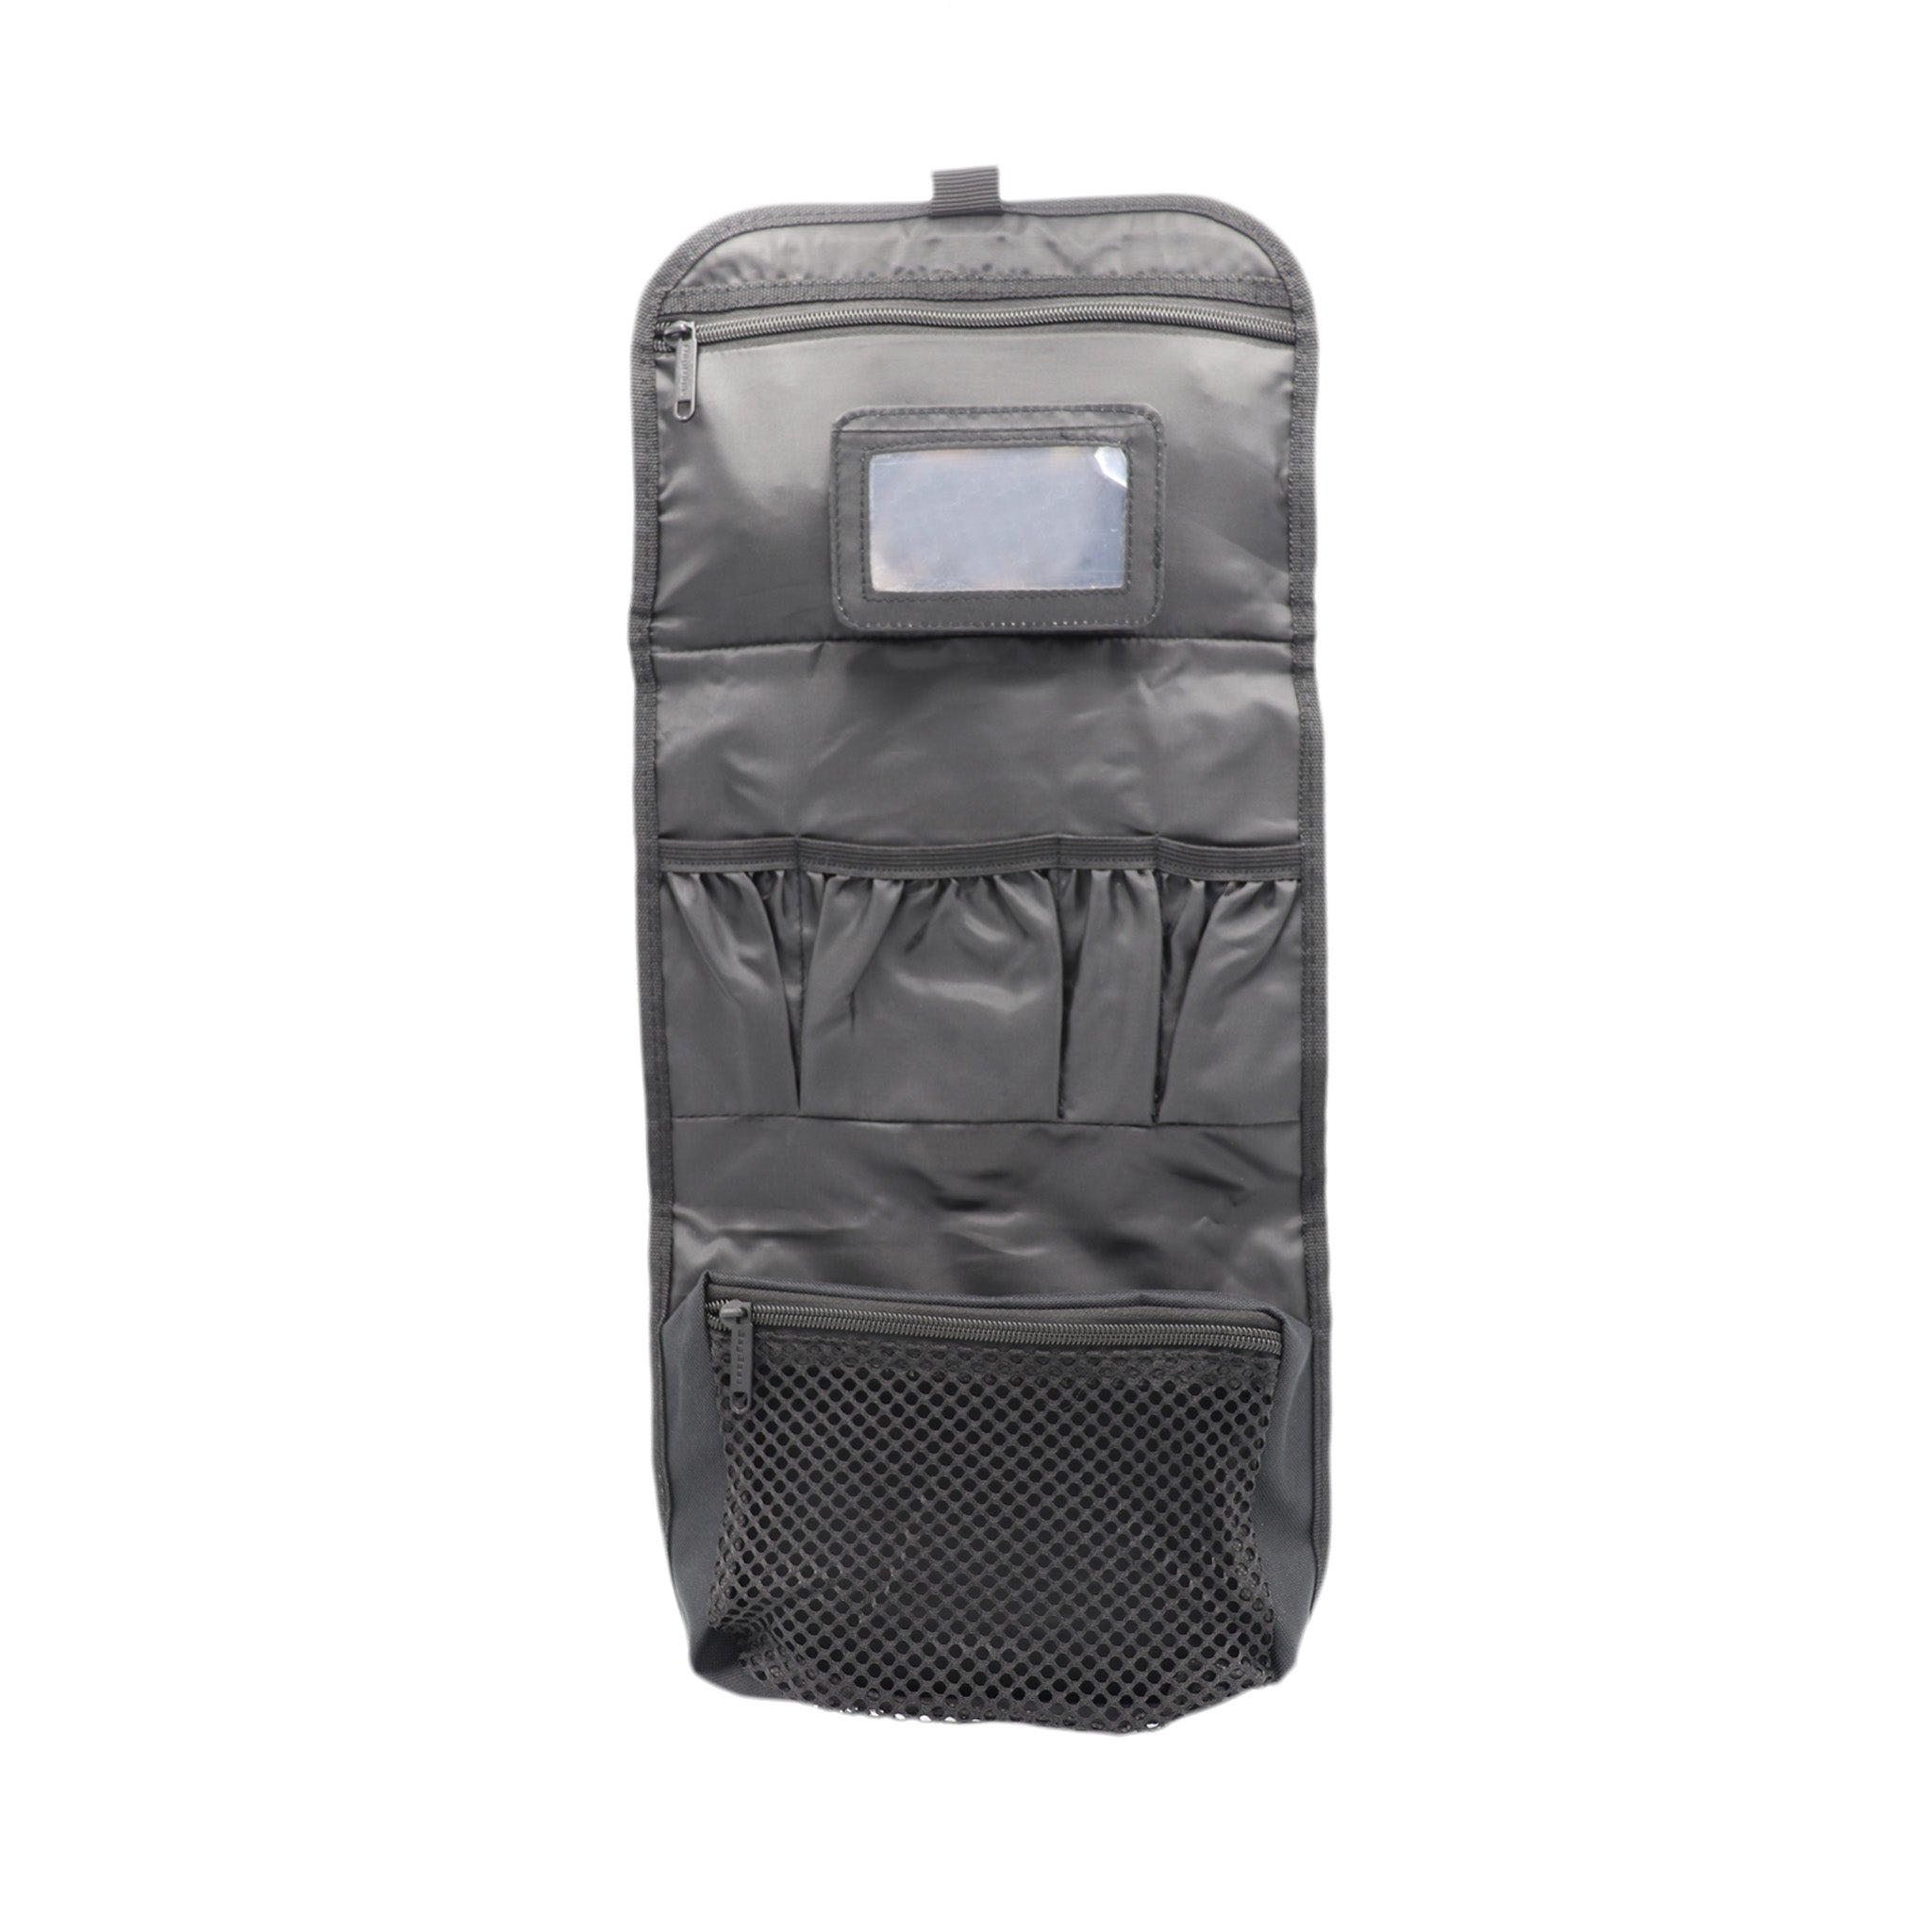 Handy - Travel Wash Bag / Cosmetic Bag